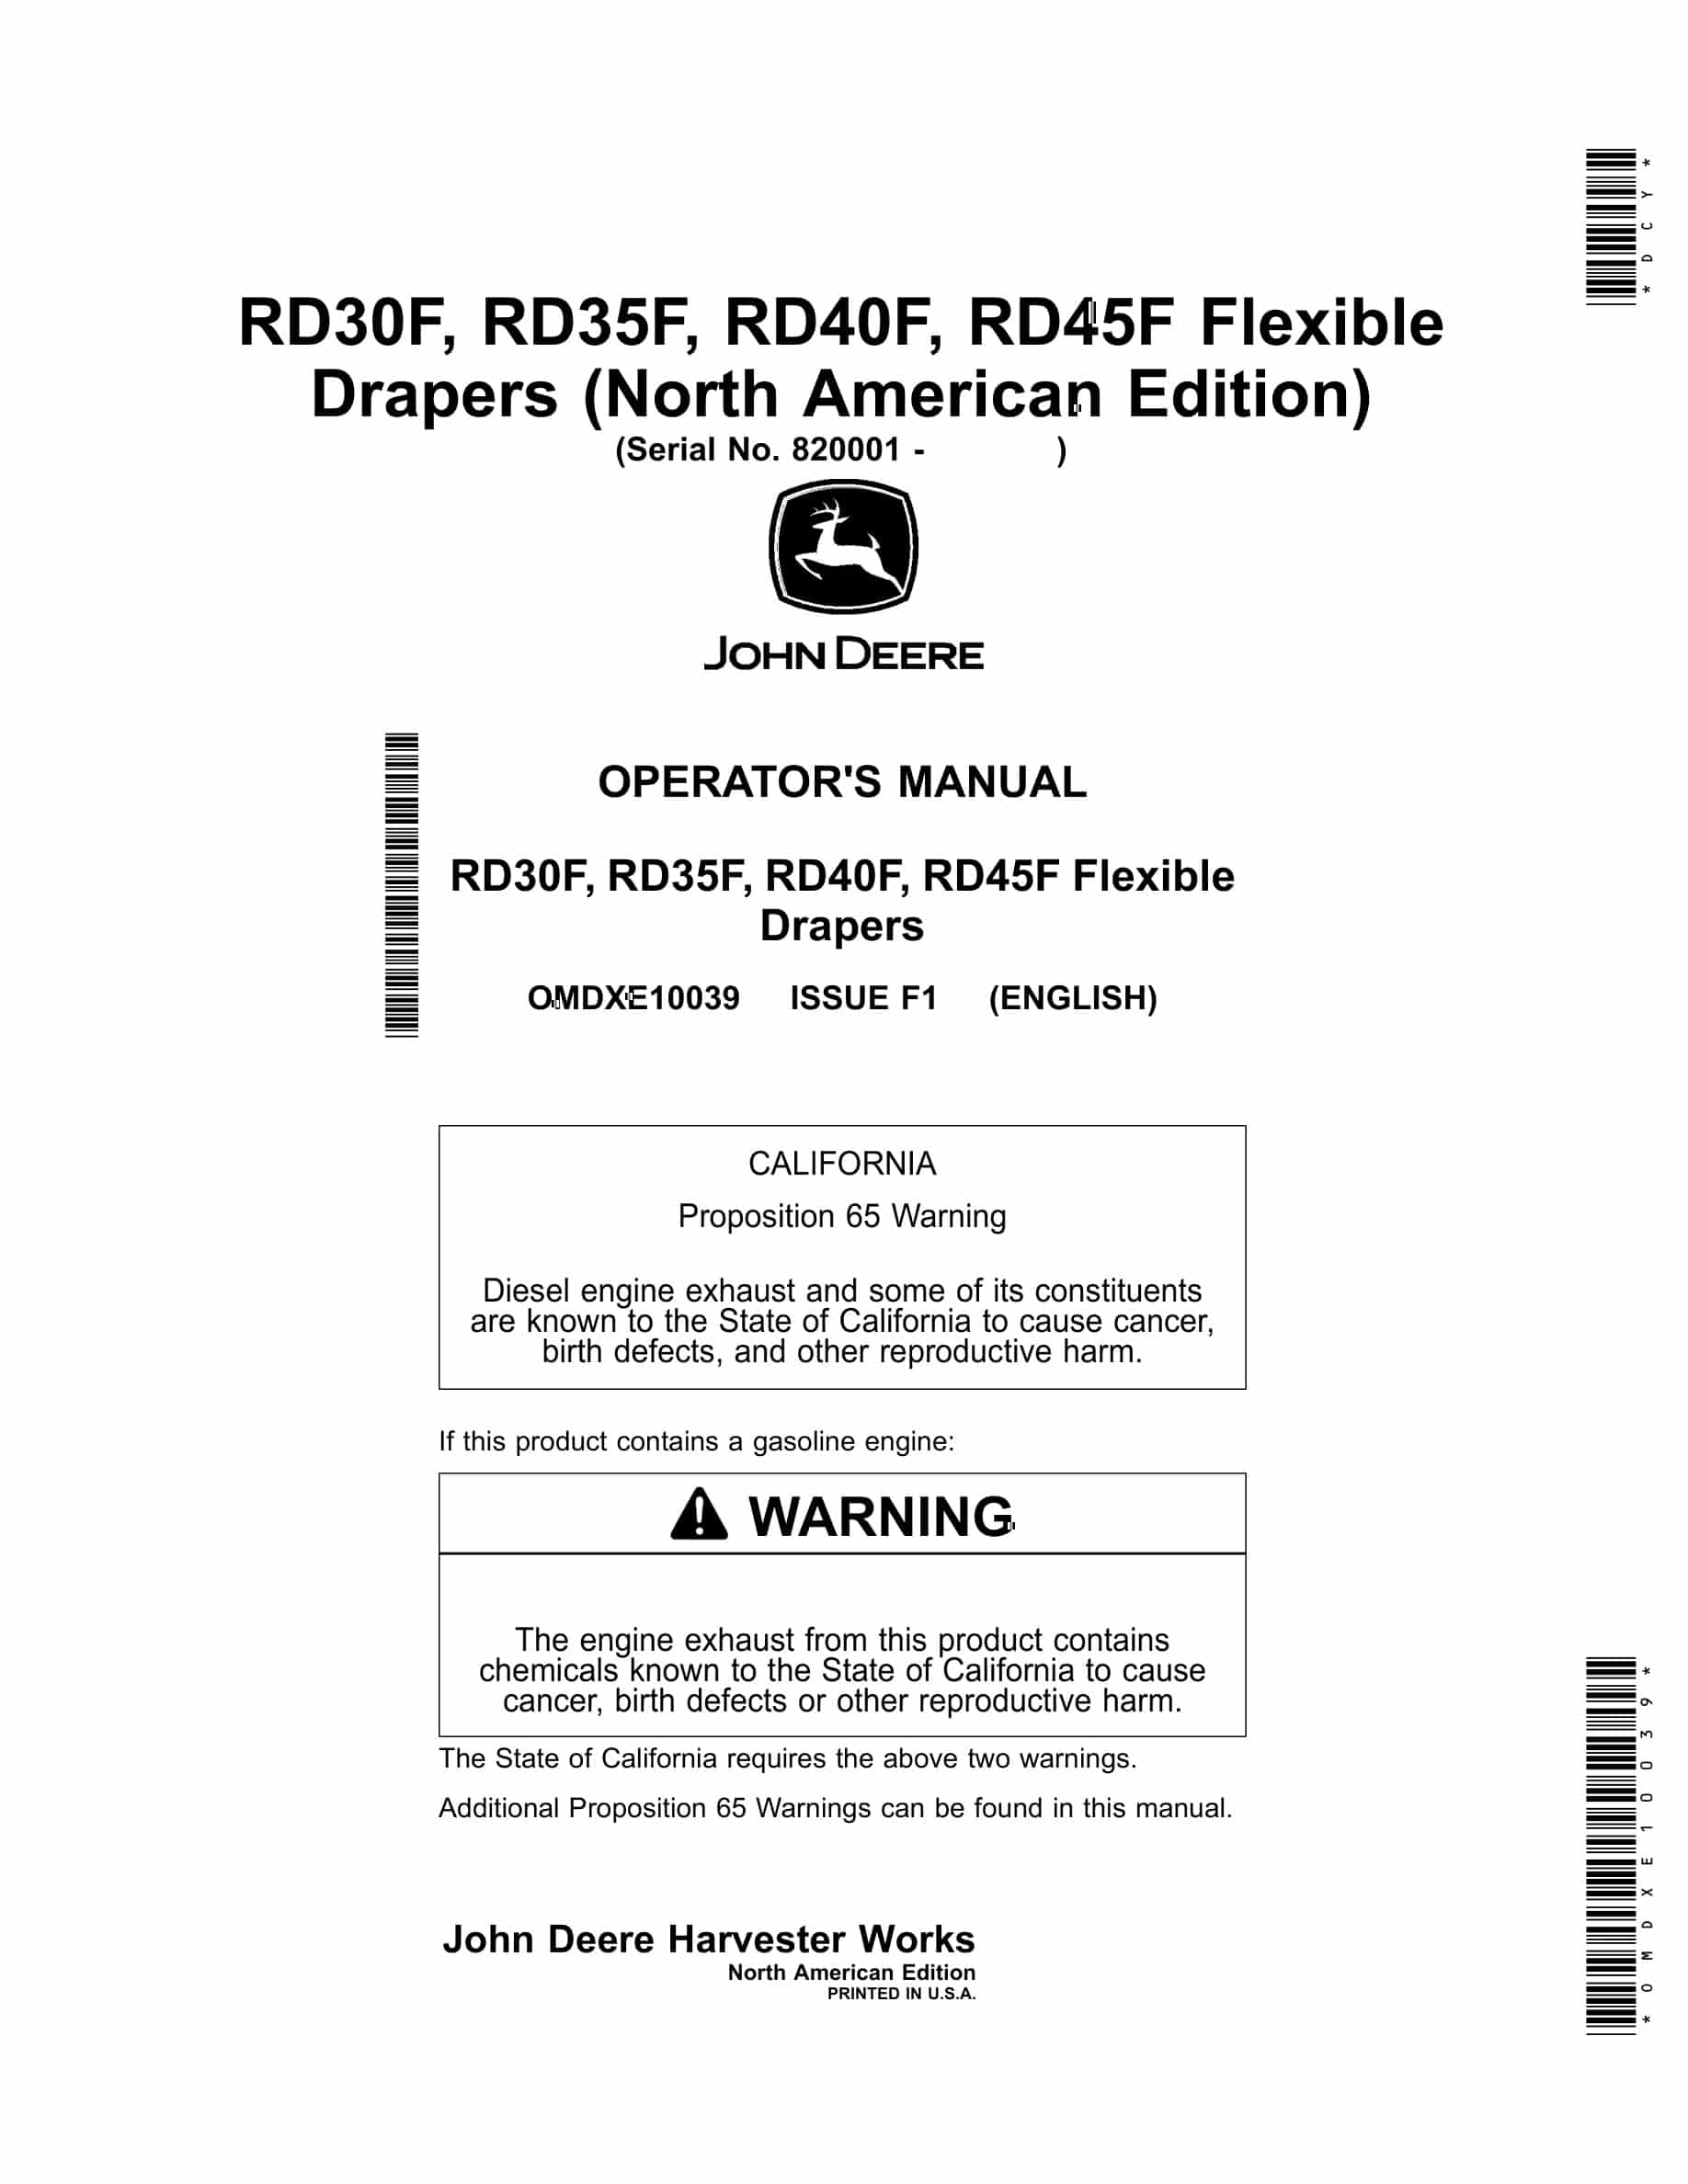 John Deere RD30F, RD35F, RD40F, RD45F Flexible Drapers Operator Manual OMDXE10039-1